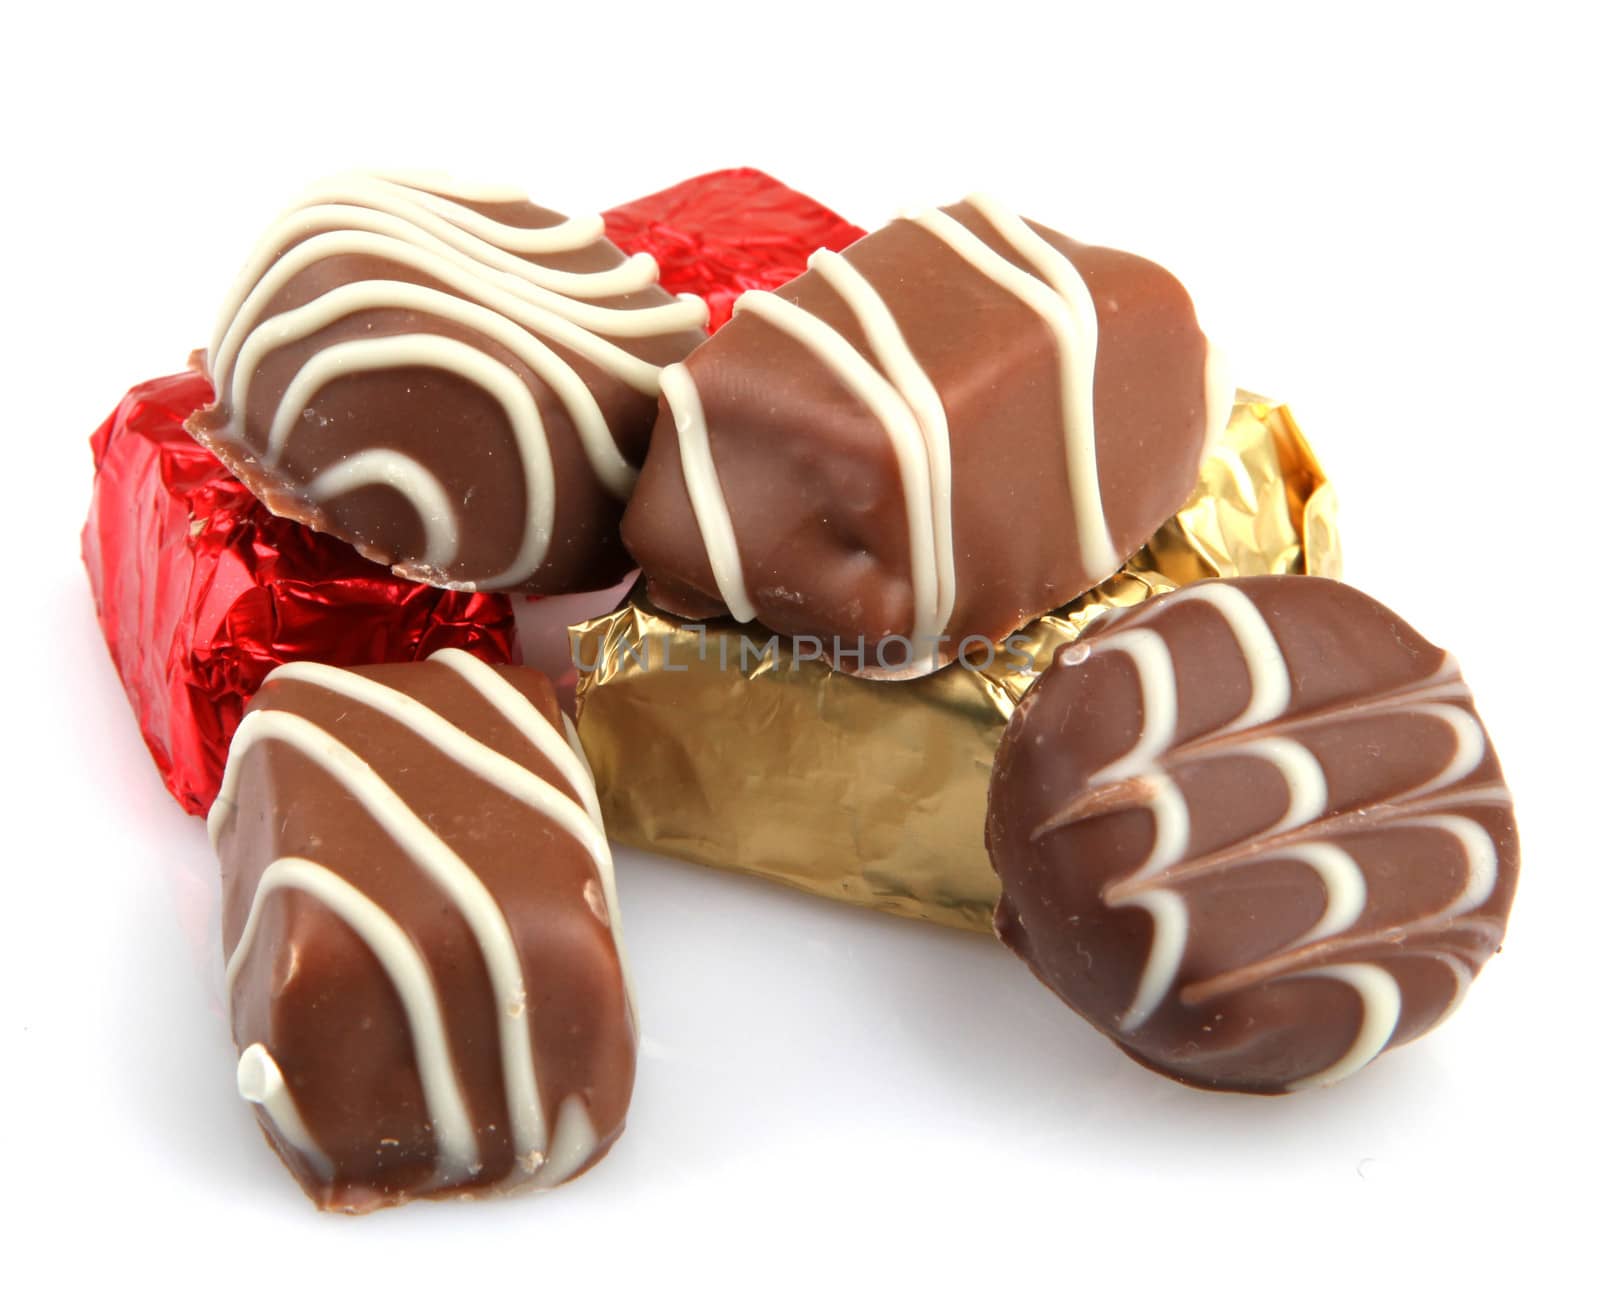 Assorted Fine Chocolates by nenov